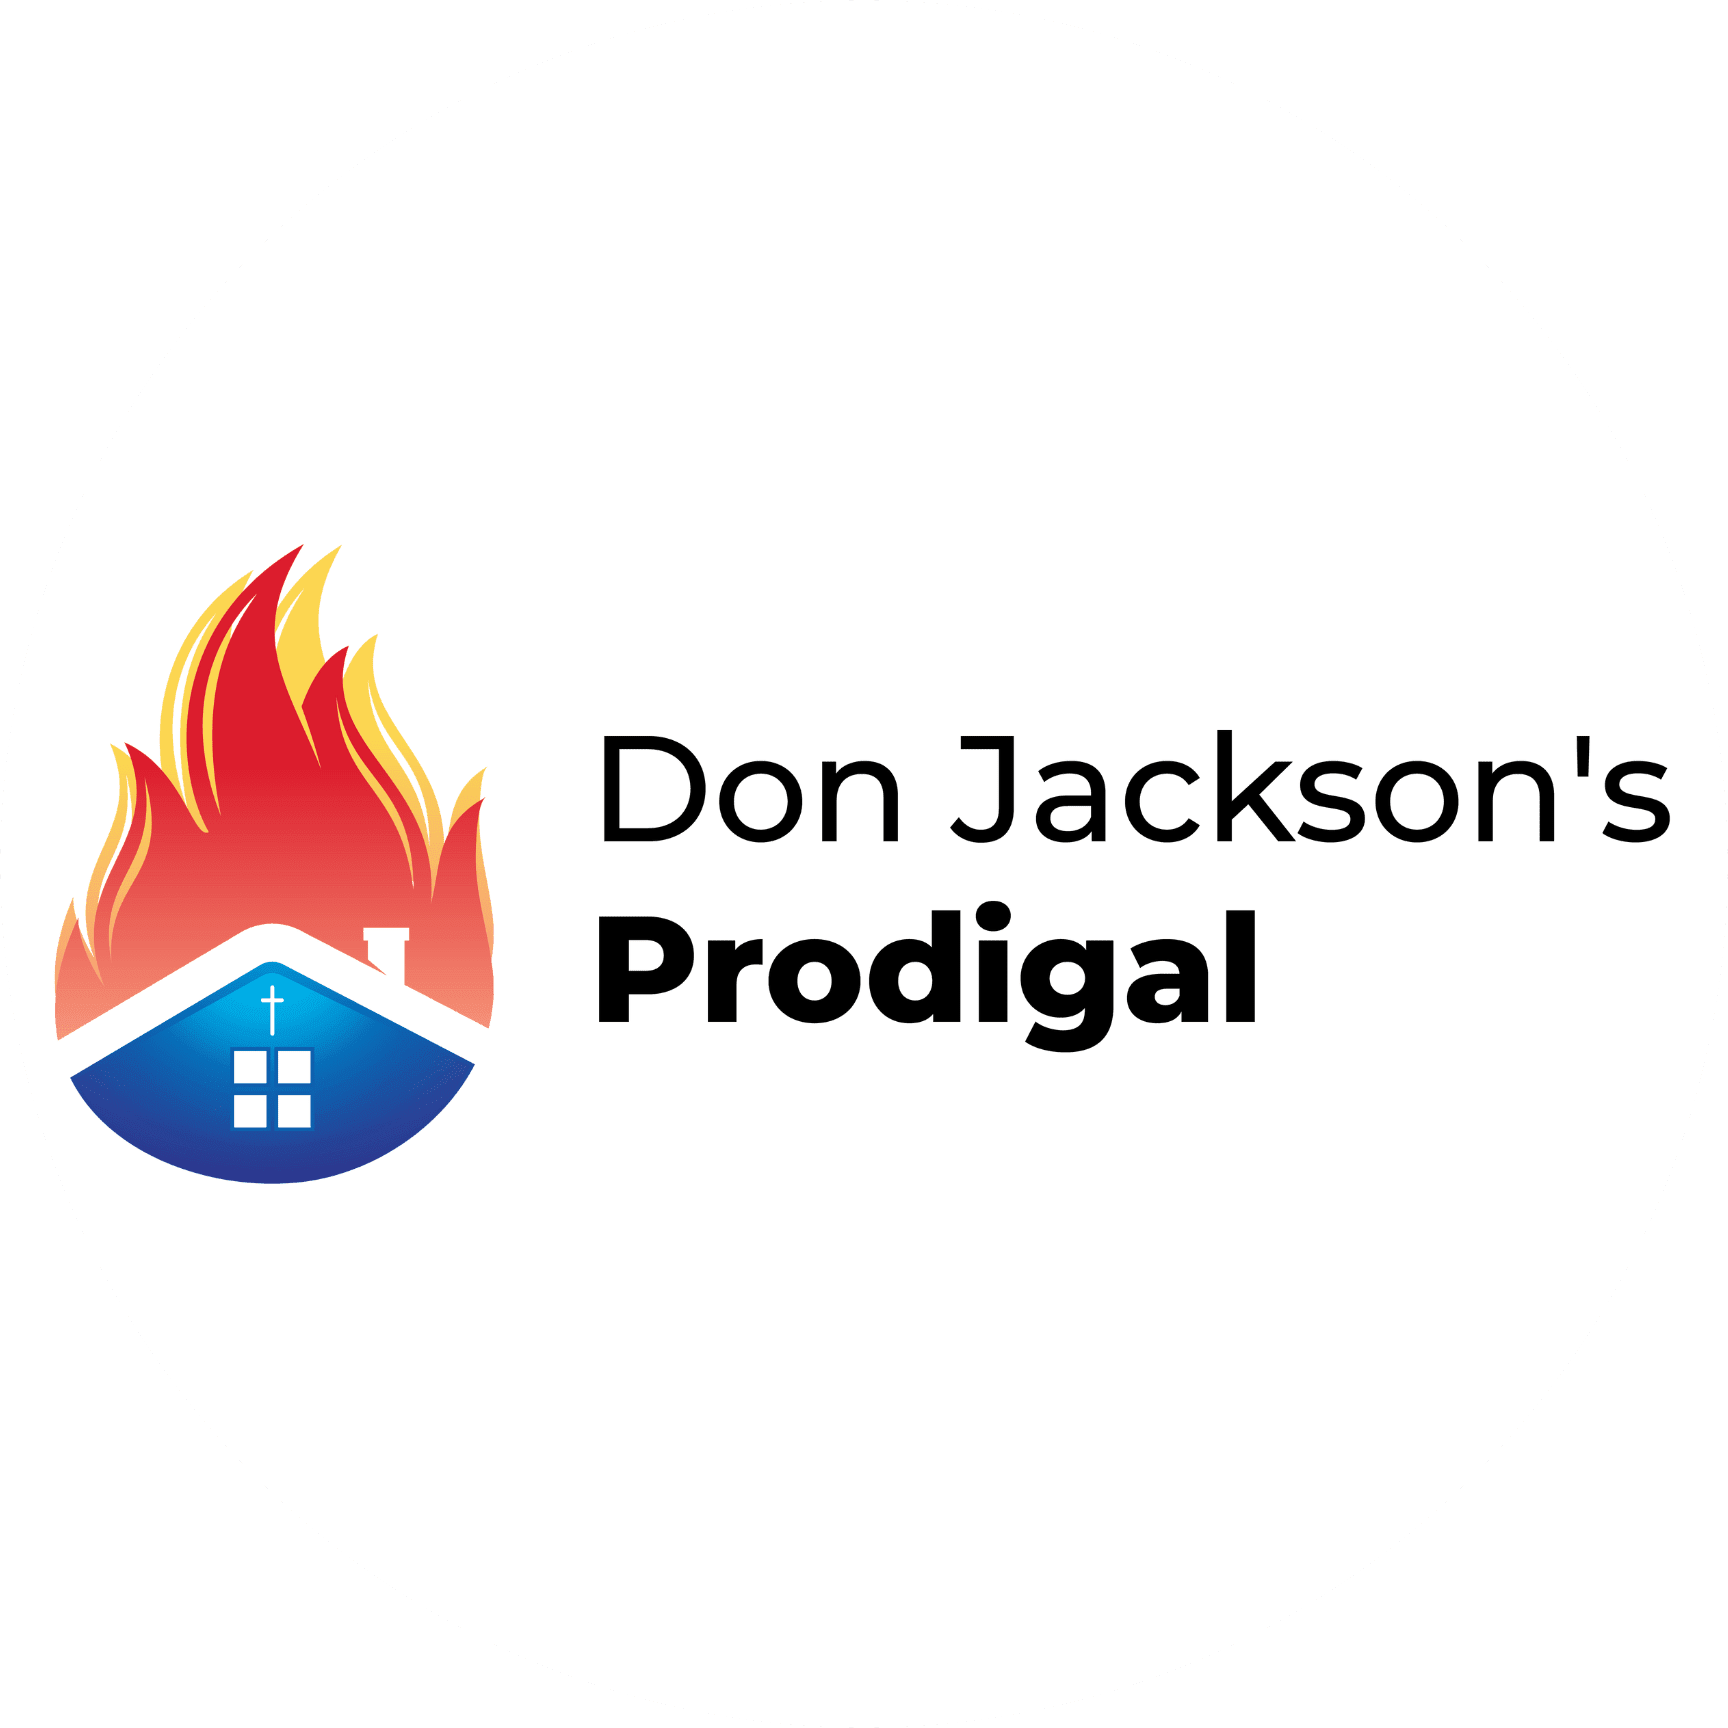 Don Jackson's Prodigal